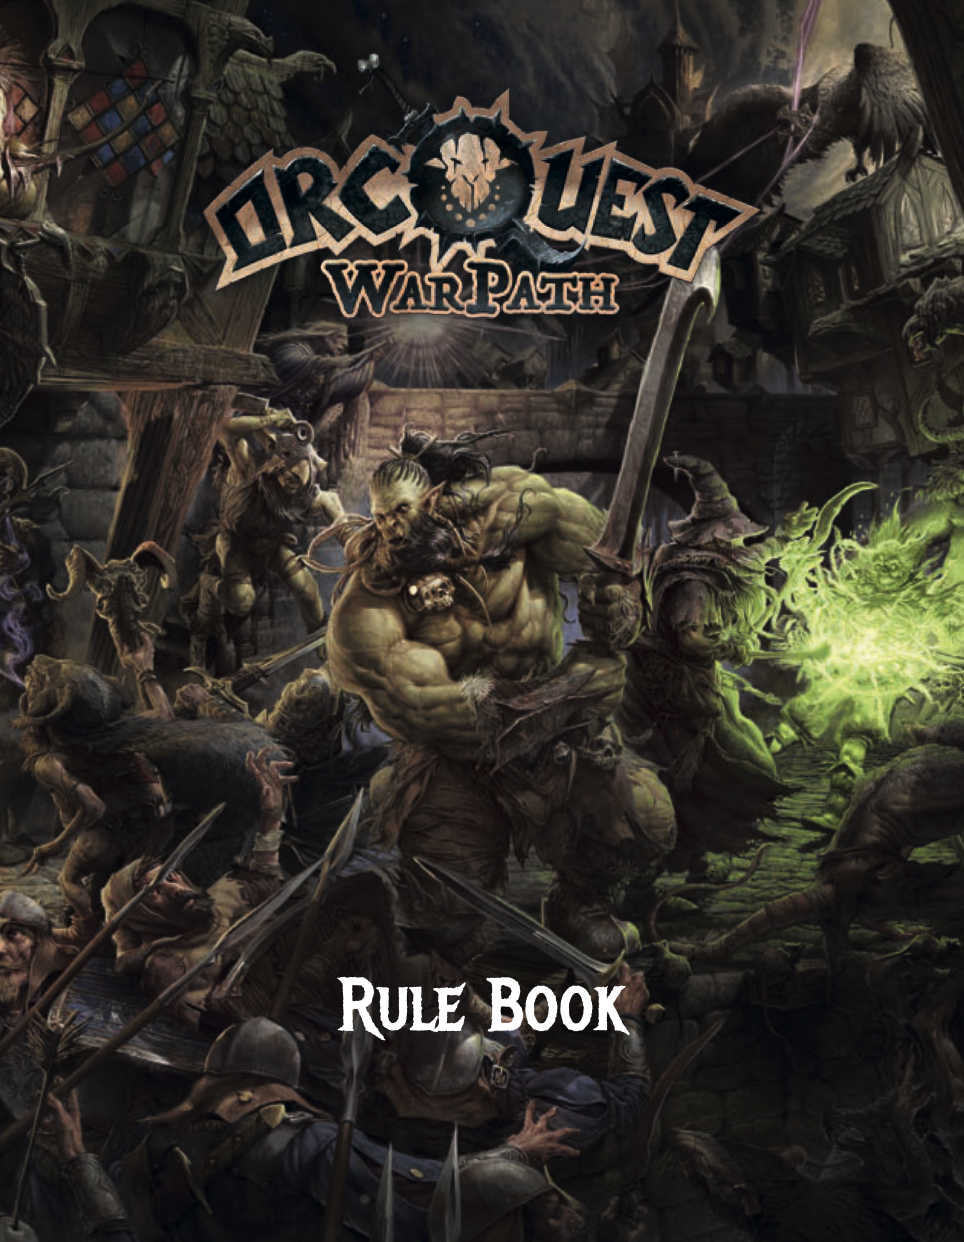 OrcQuest Warpath Rule book